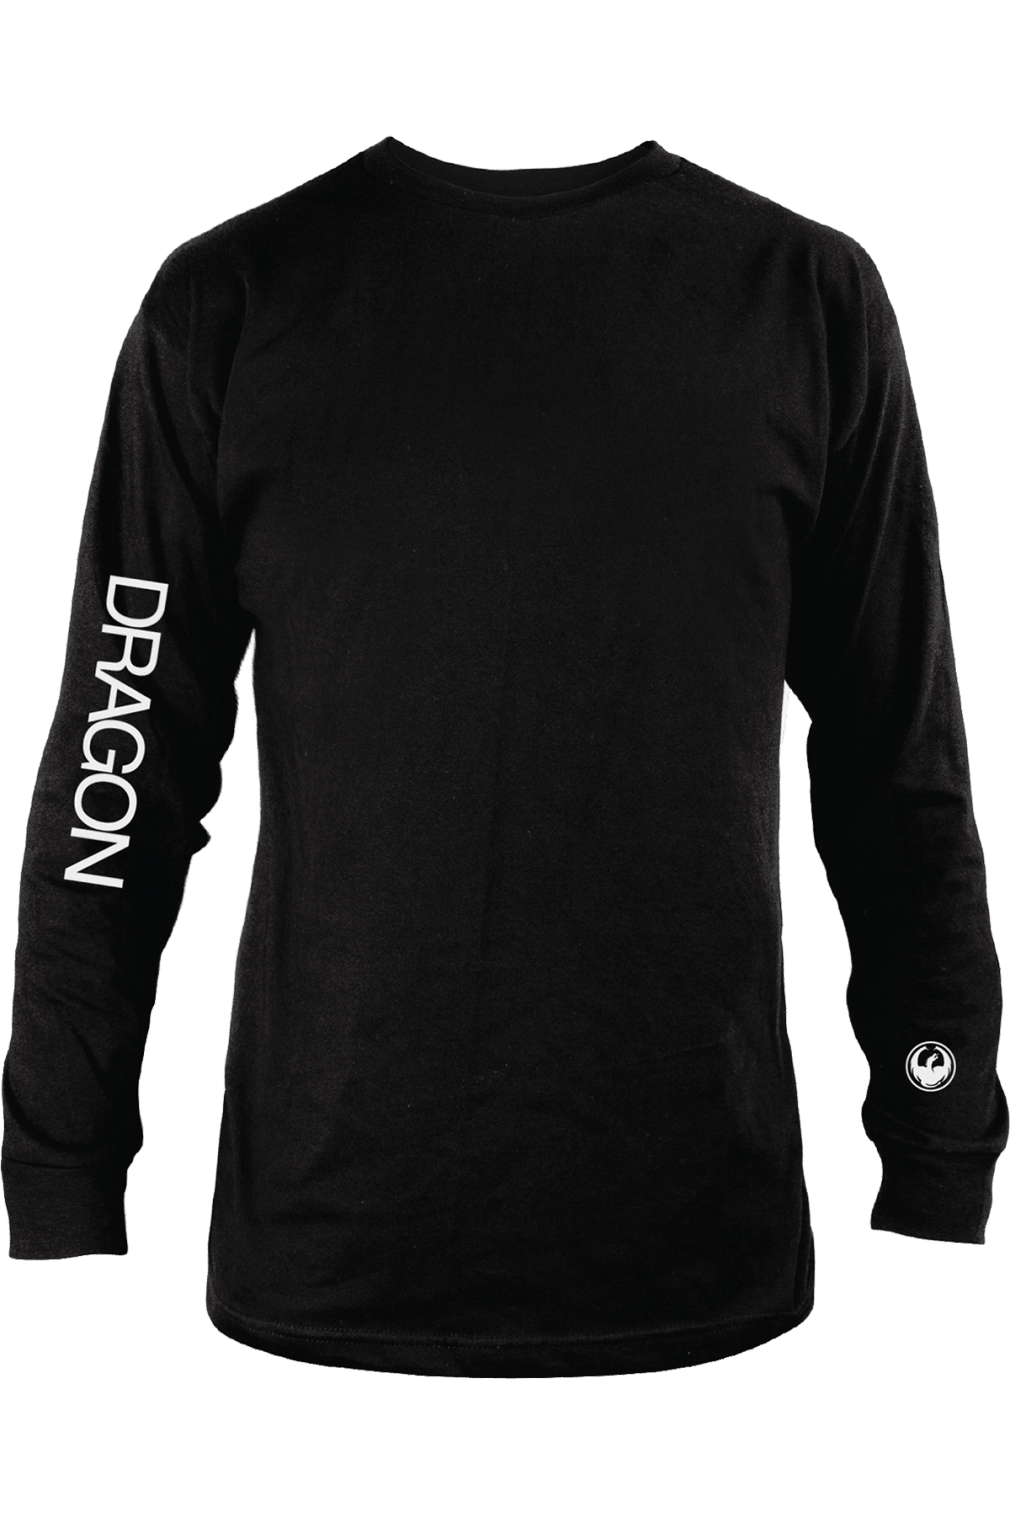 Apparel | Dragon T-Shirts, Jackets, Hats & More